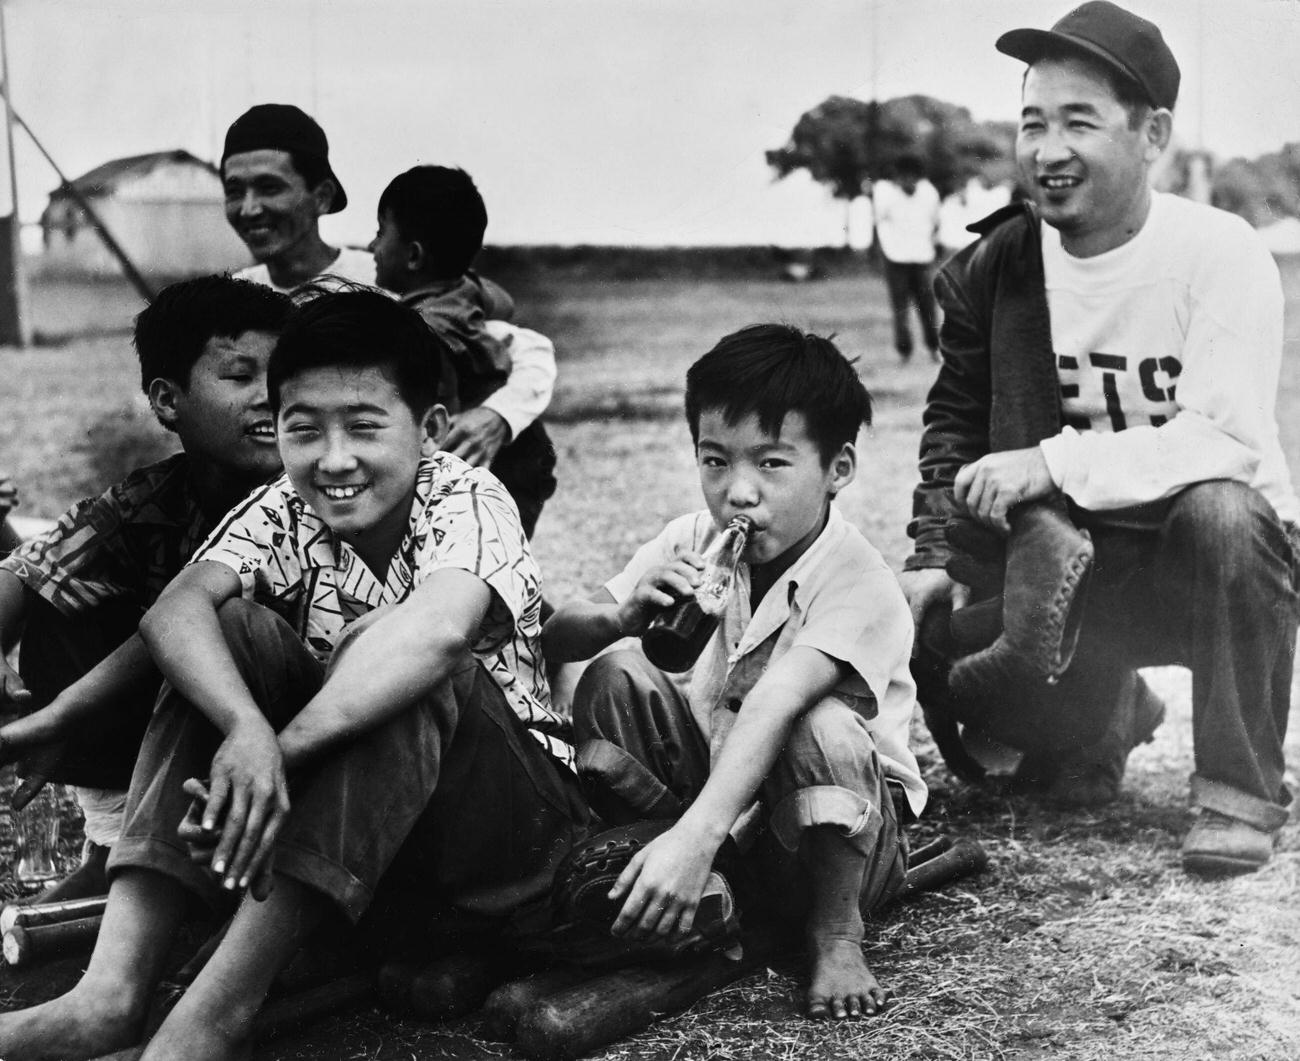 Young Hawaiians, one drinking Coca-Cola, waiting to bat during a baseball game in Hawaii, circa 1955.